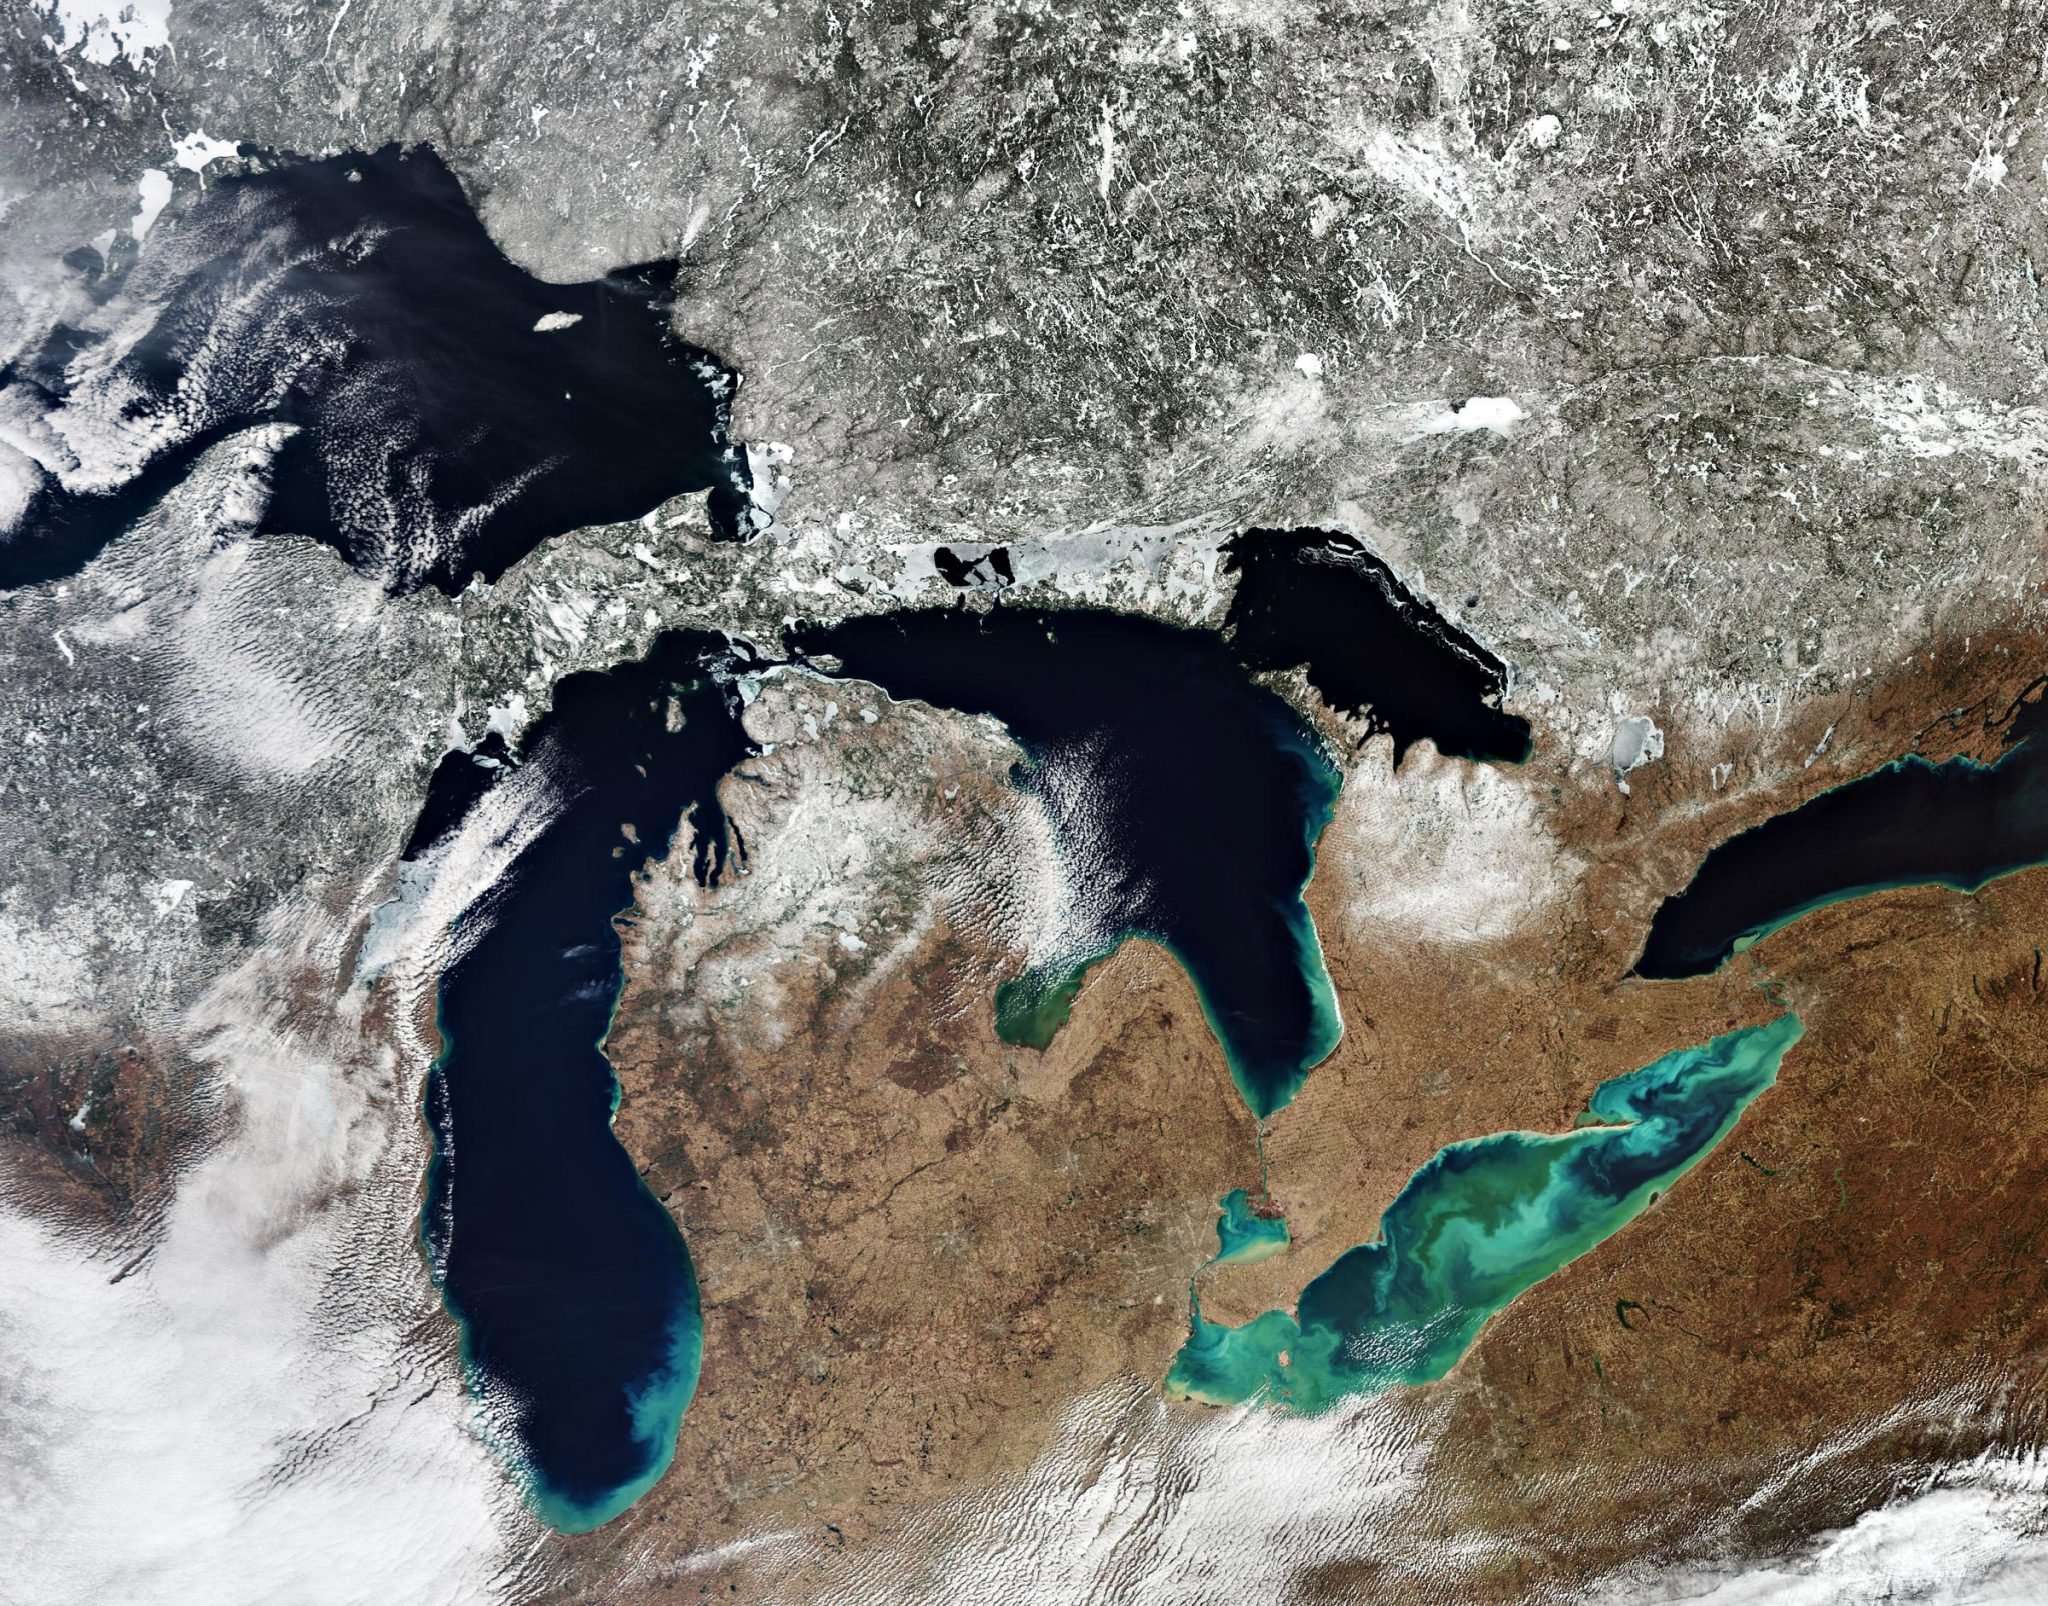 The great Lakes Канада. Озеро Мичиган из космоса. Озеро Мичиган вид из космоса. 5 Великих озер Северной Америки. Великое озеро на границе сша и канады